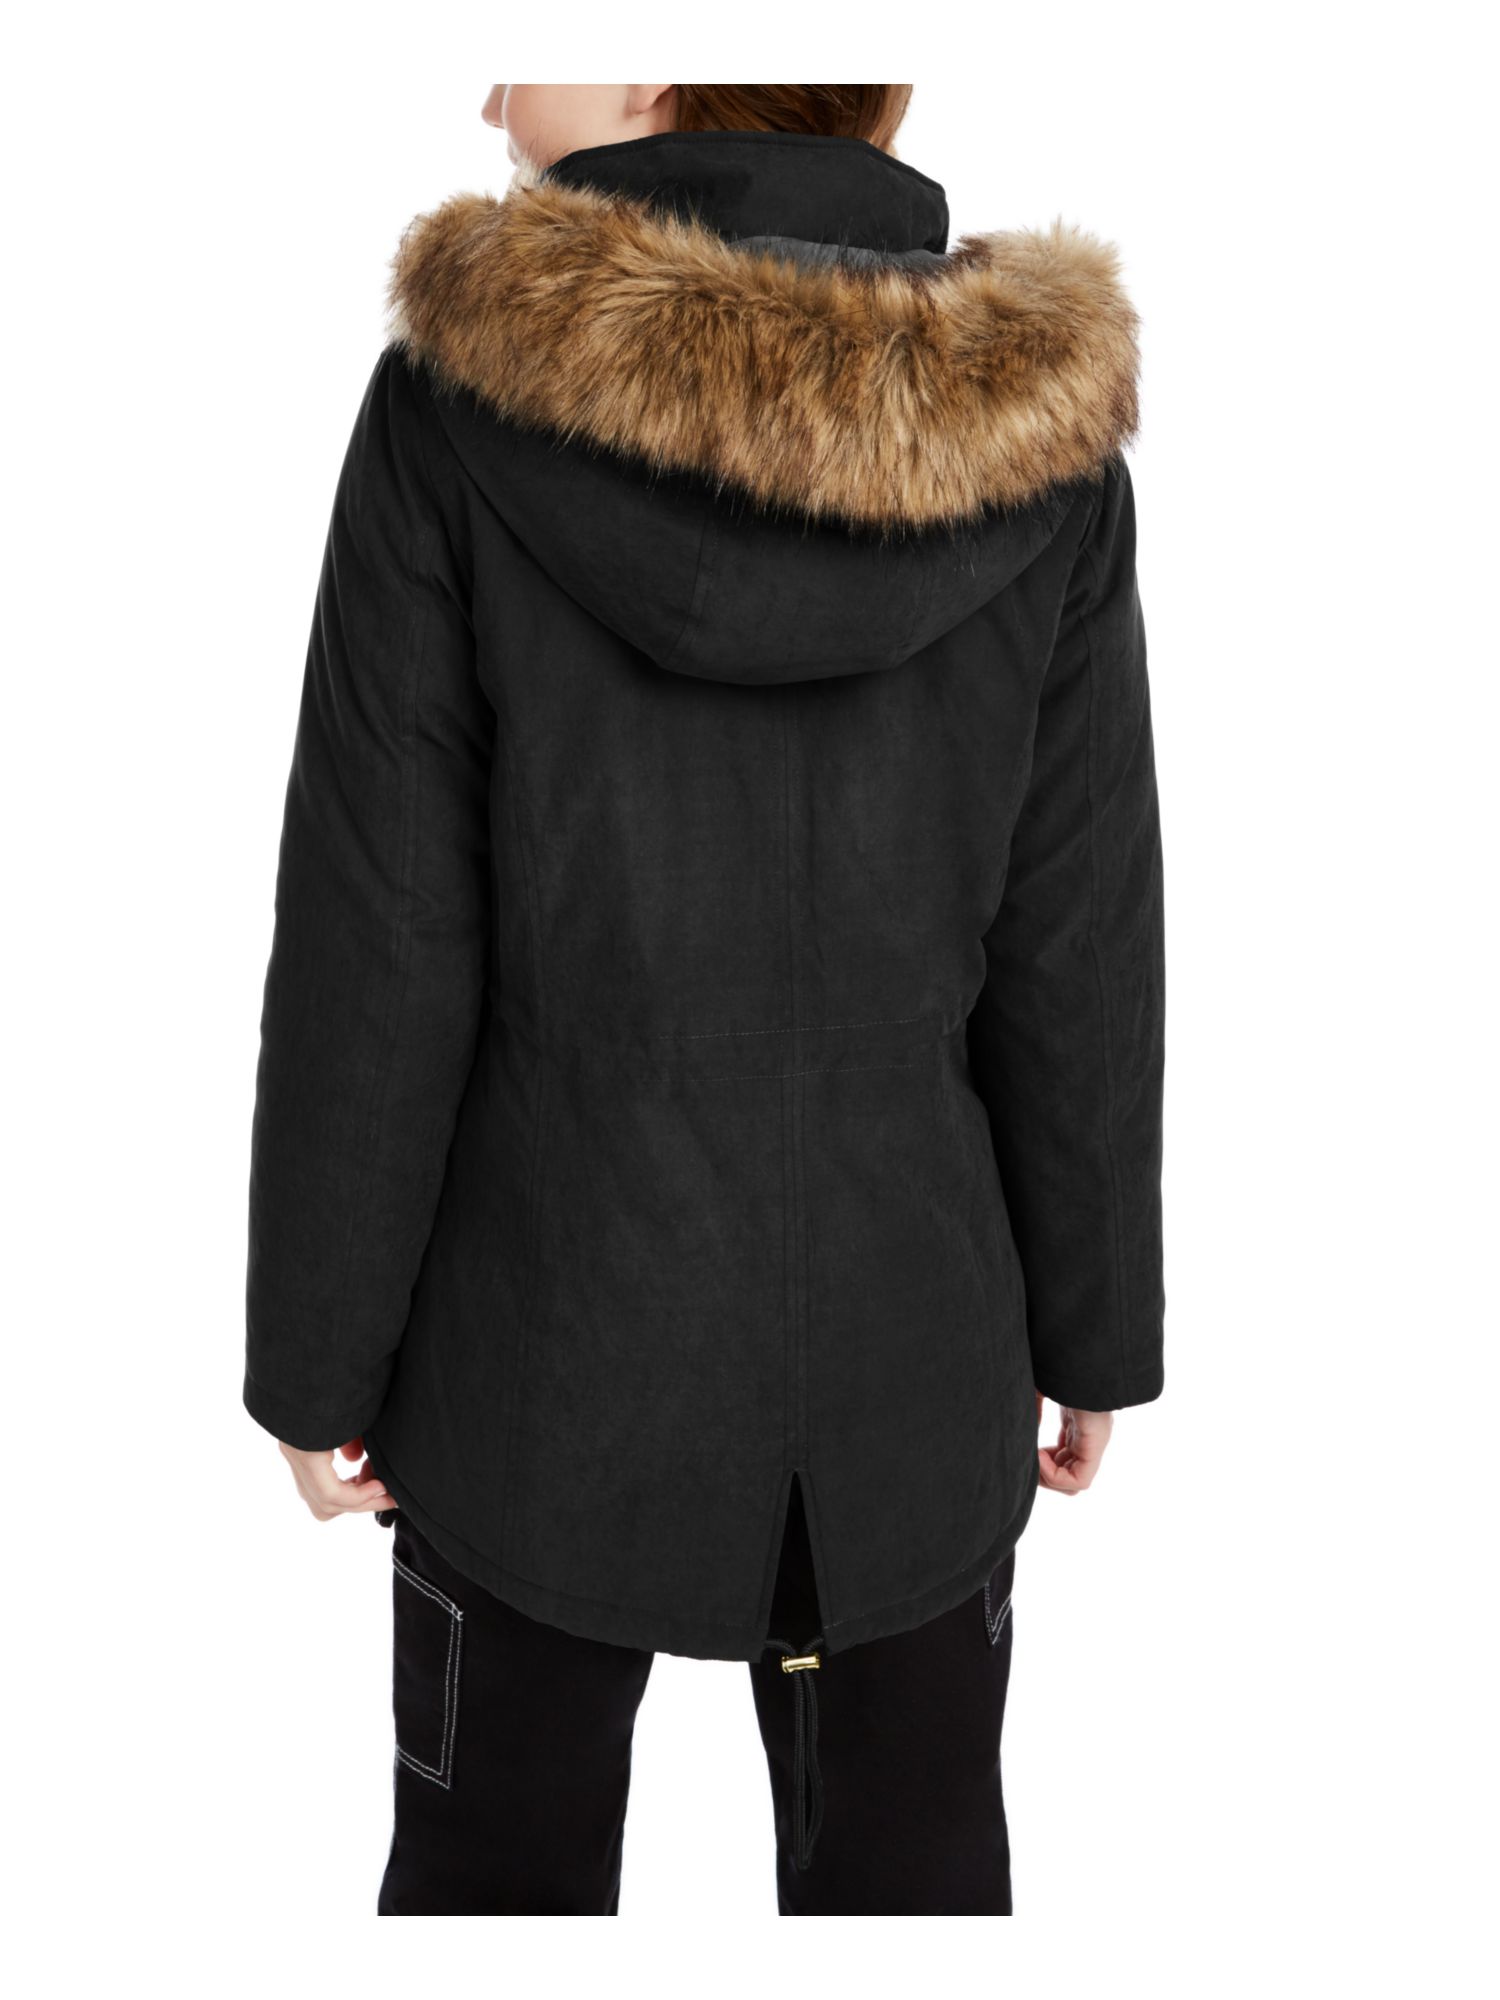 CELEBRITY PINK Womens Black Parka Winter Jacket Coat Juniors S - image 2 of 4